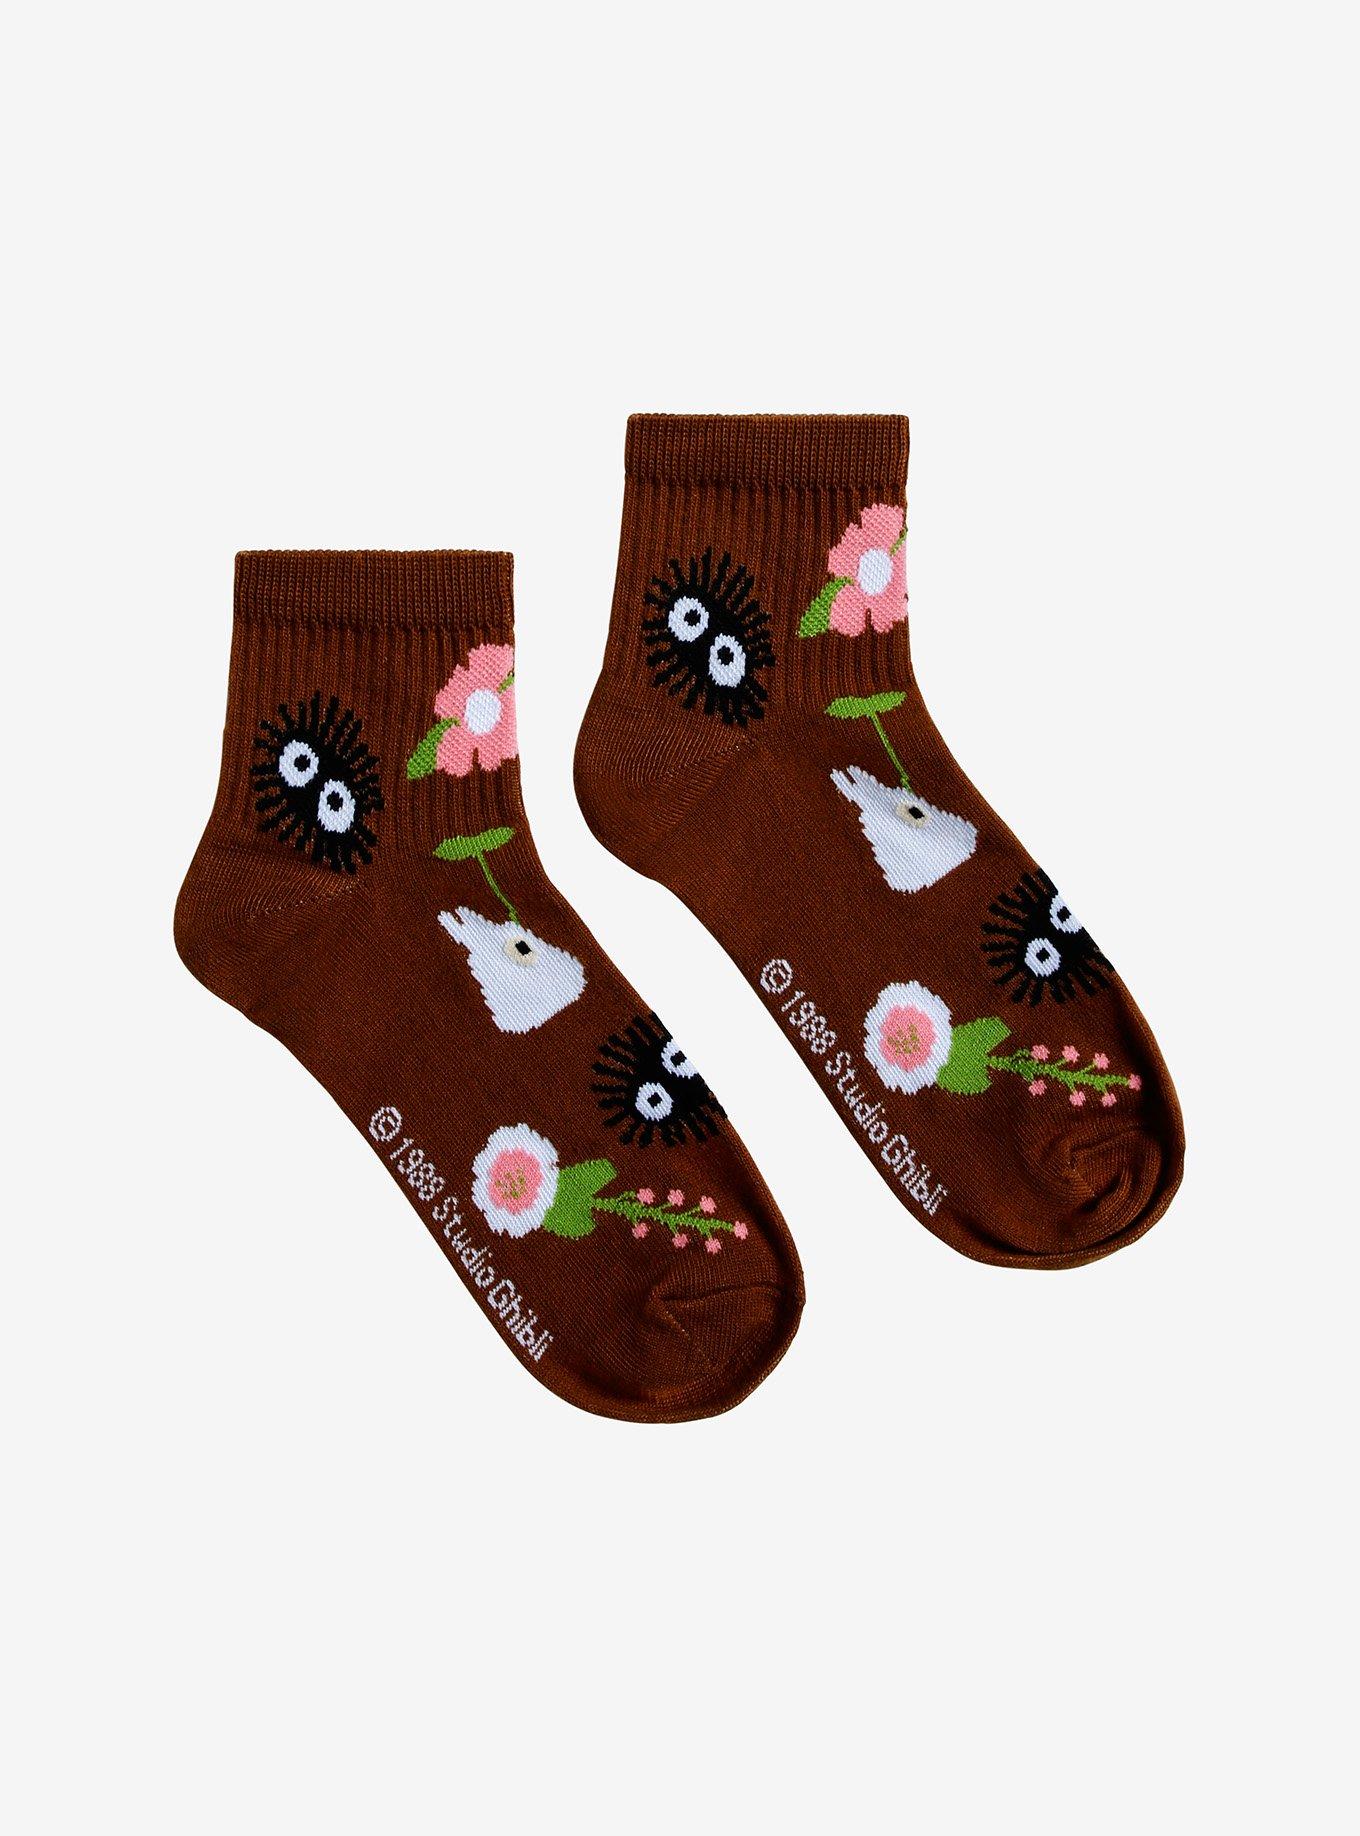 Studio Ghibli My Neighbor Totoro Soot Sprite Mushroom Ankle Socks, , alternate